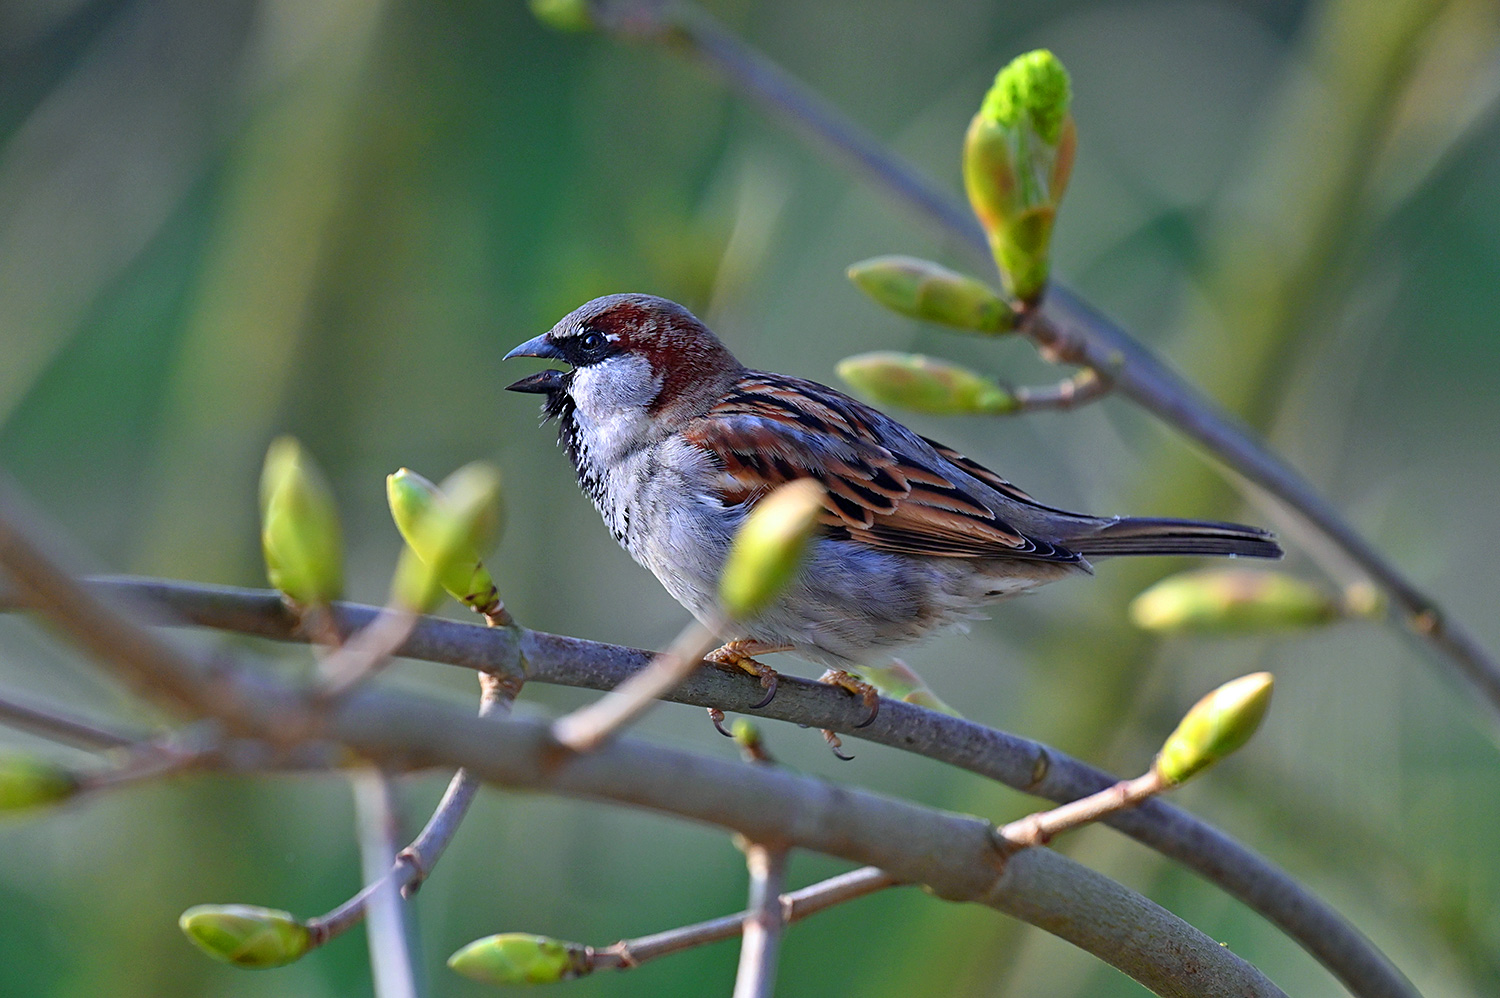 Sparrow among fresh shoots on a tree